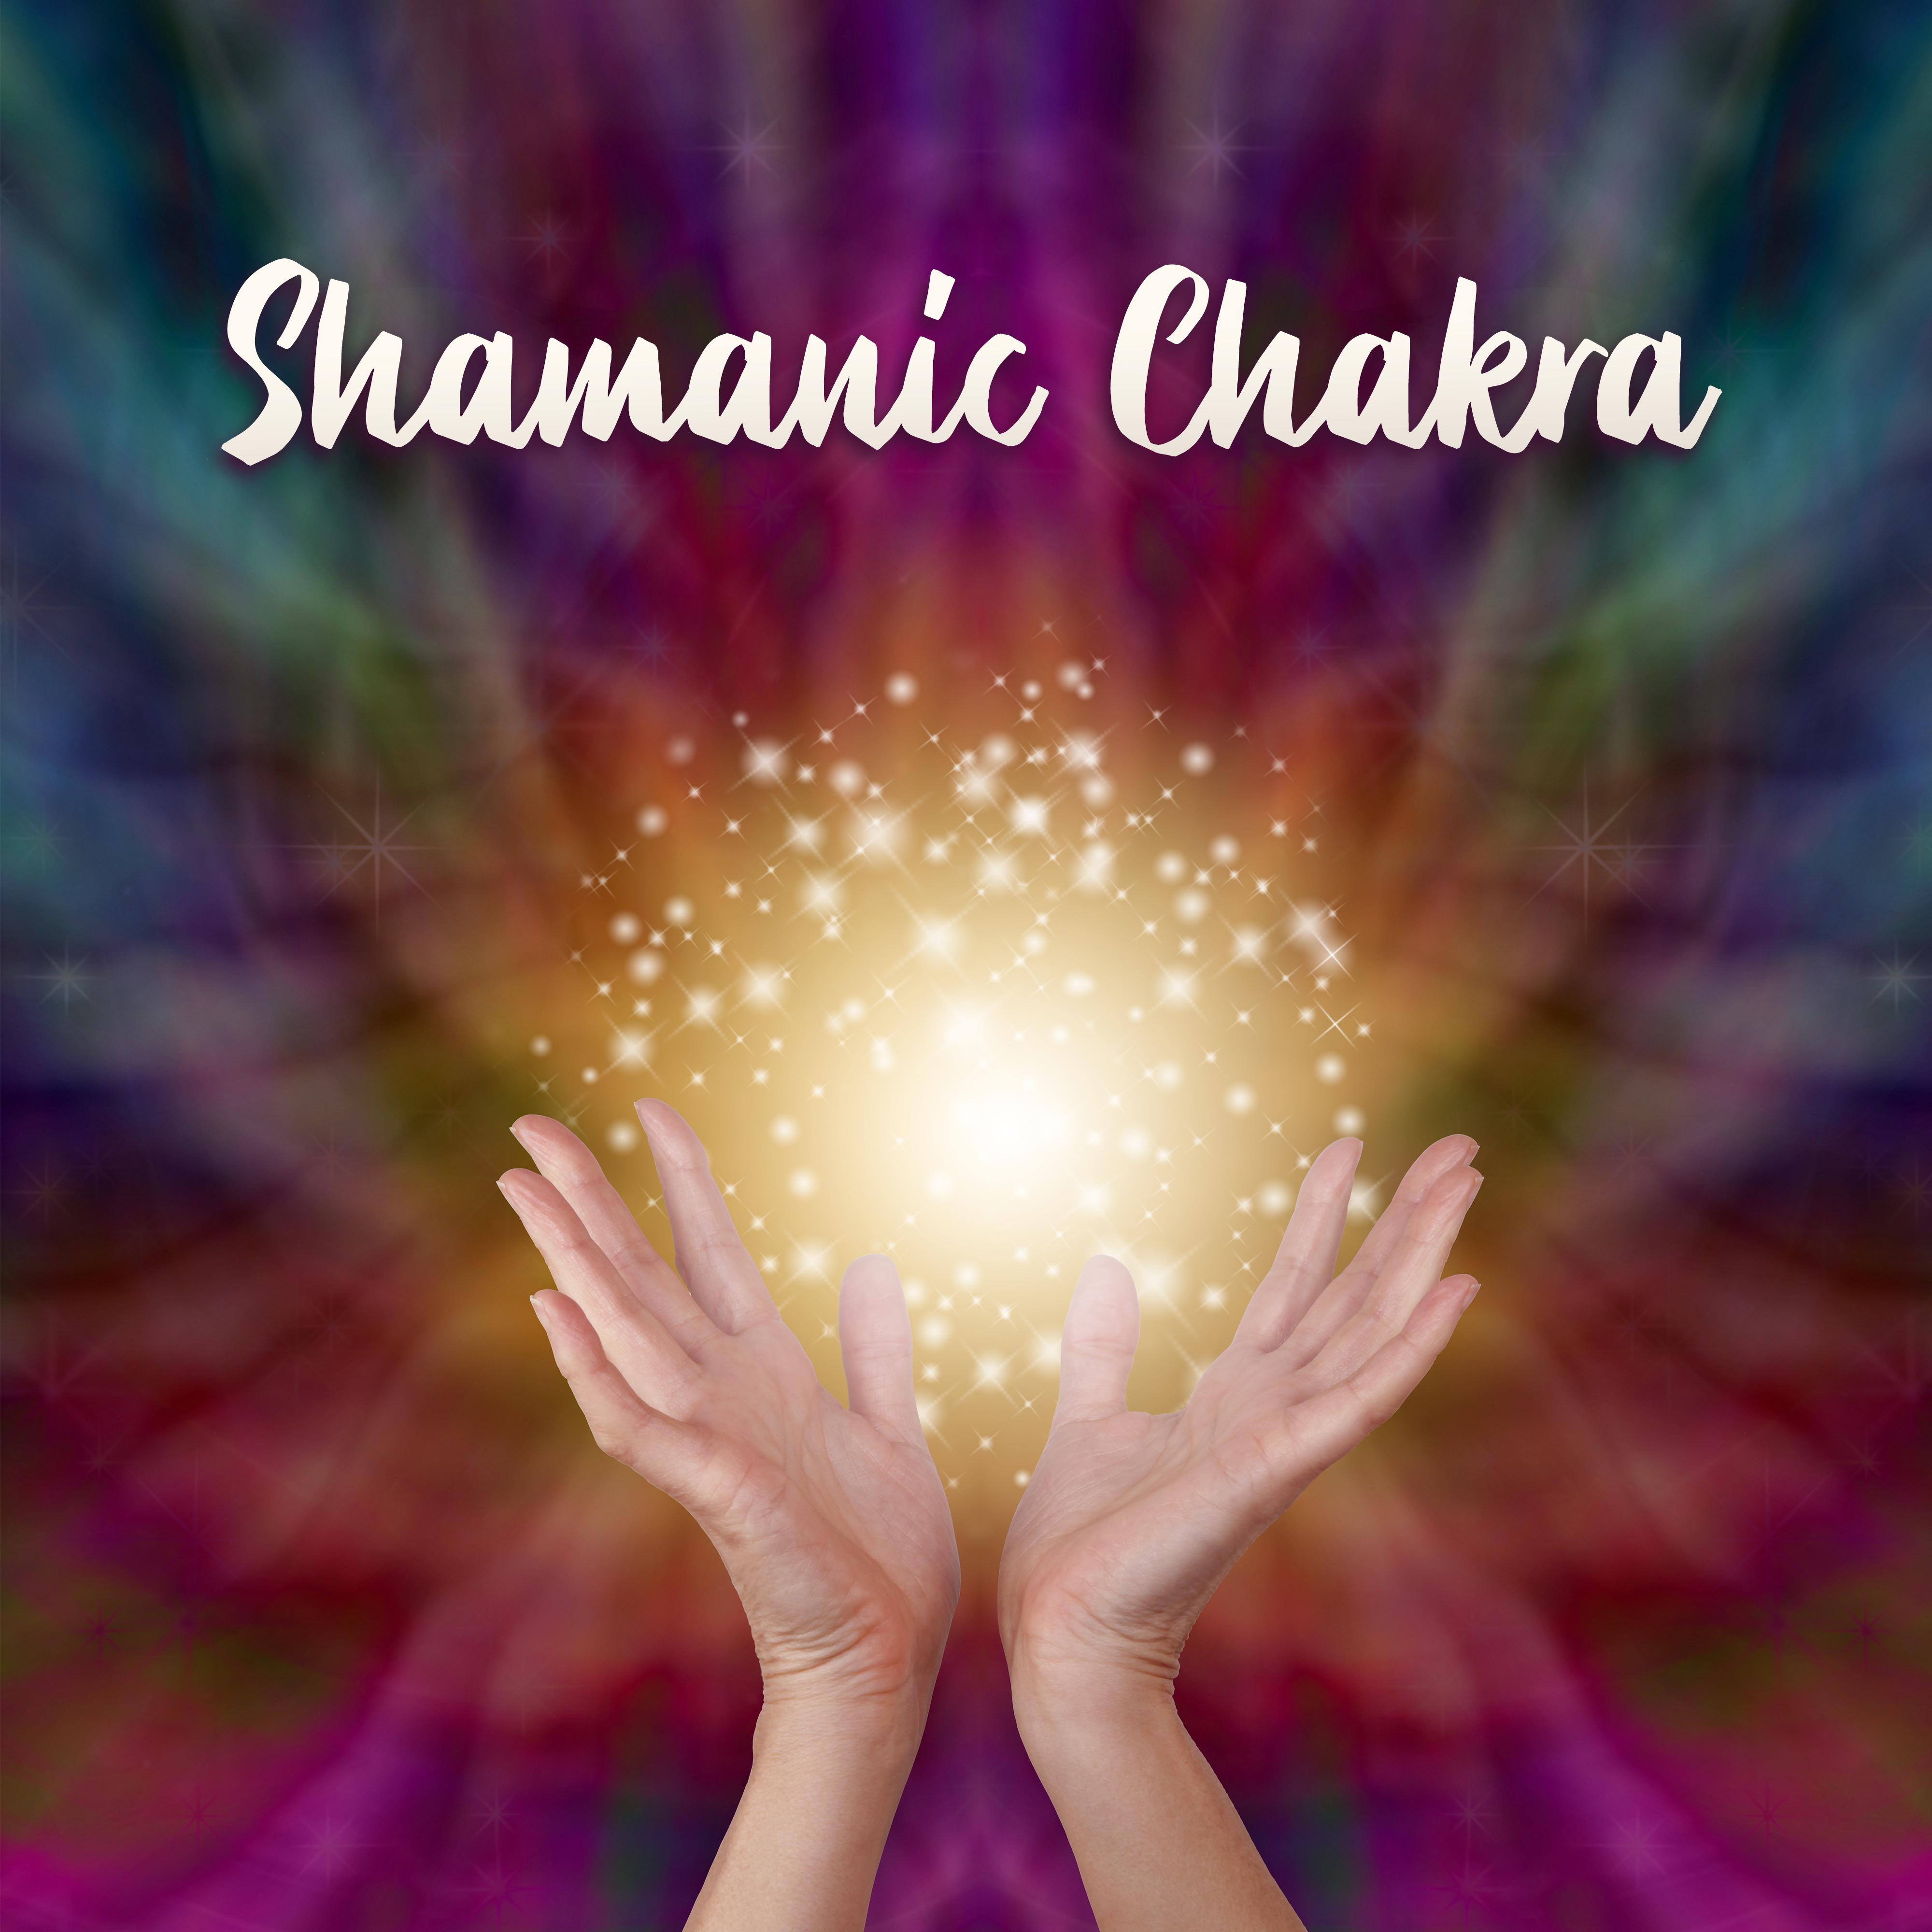 Shamanic Chakra – Indian Healing Music, Deep Harmony, Nature Sounds for Relaxation, African Melodies for Meditation, Yoga, Spiritual Awakening